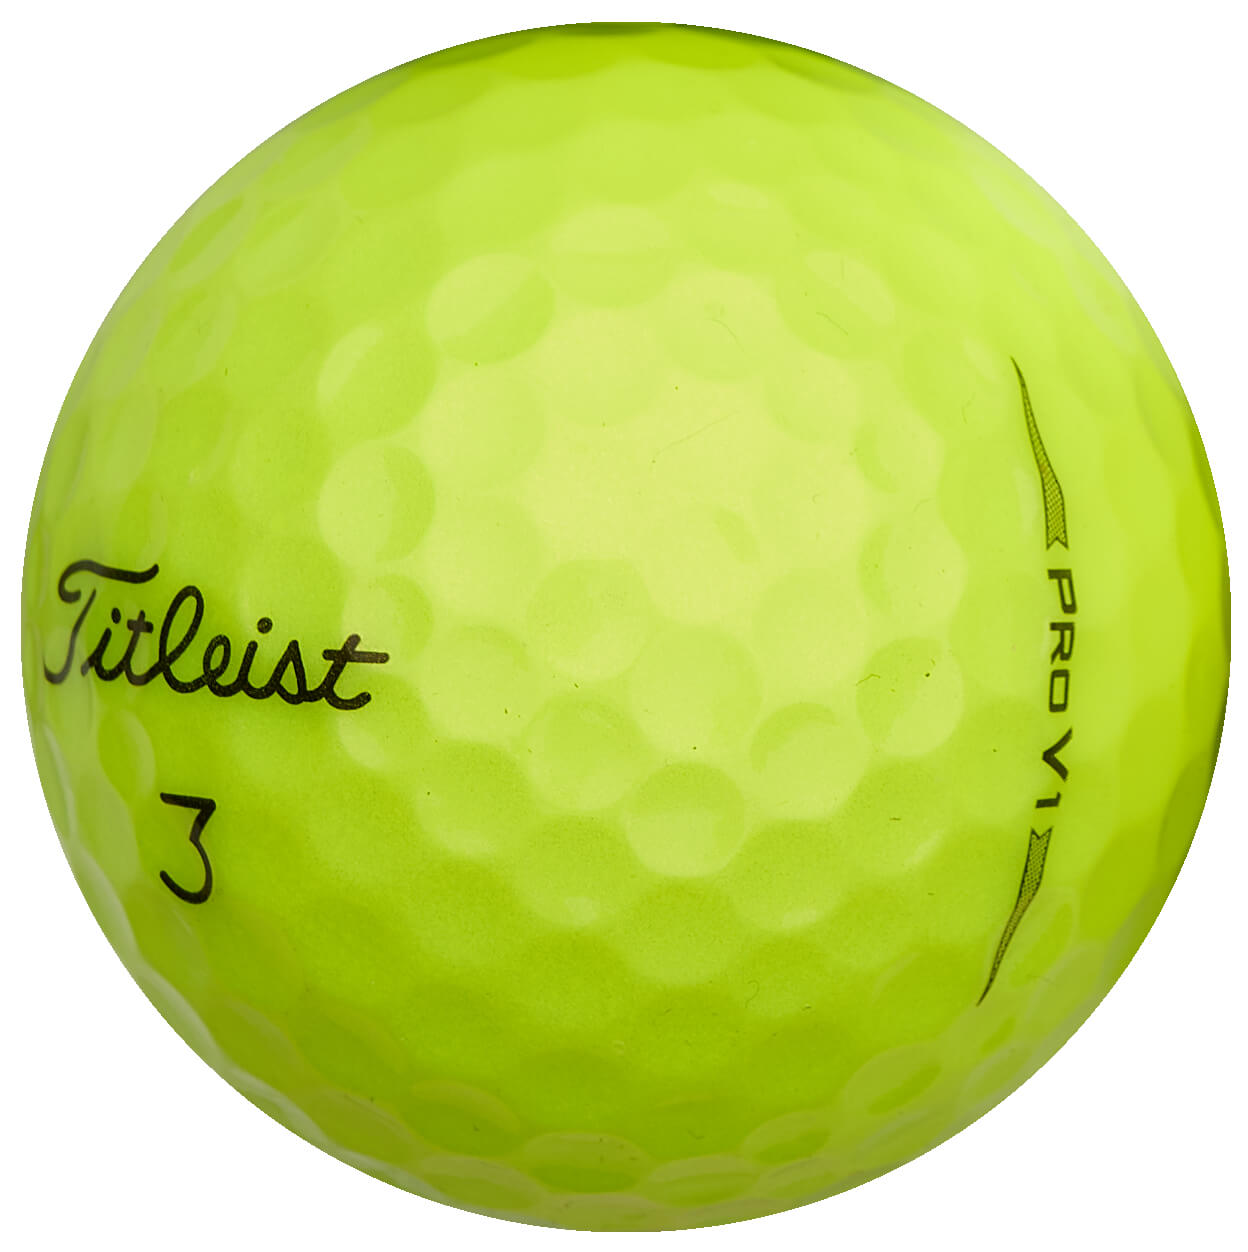 25 Titleist Pro V1 Lakeballs, yellow